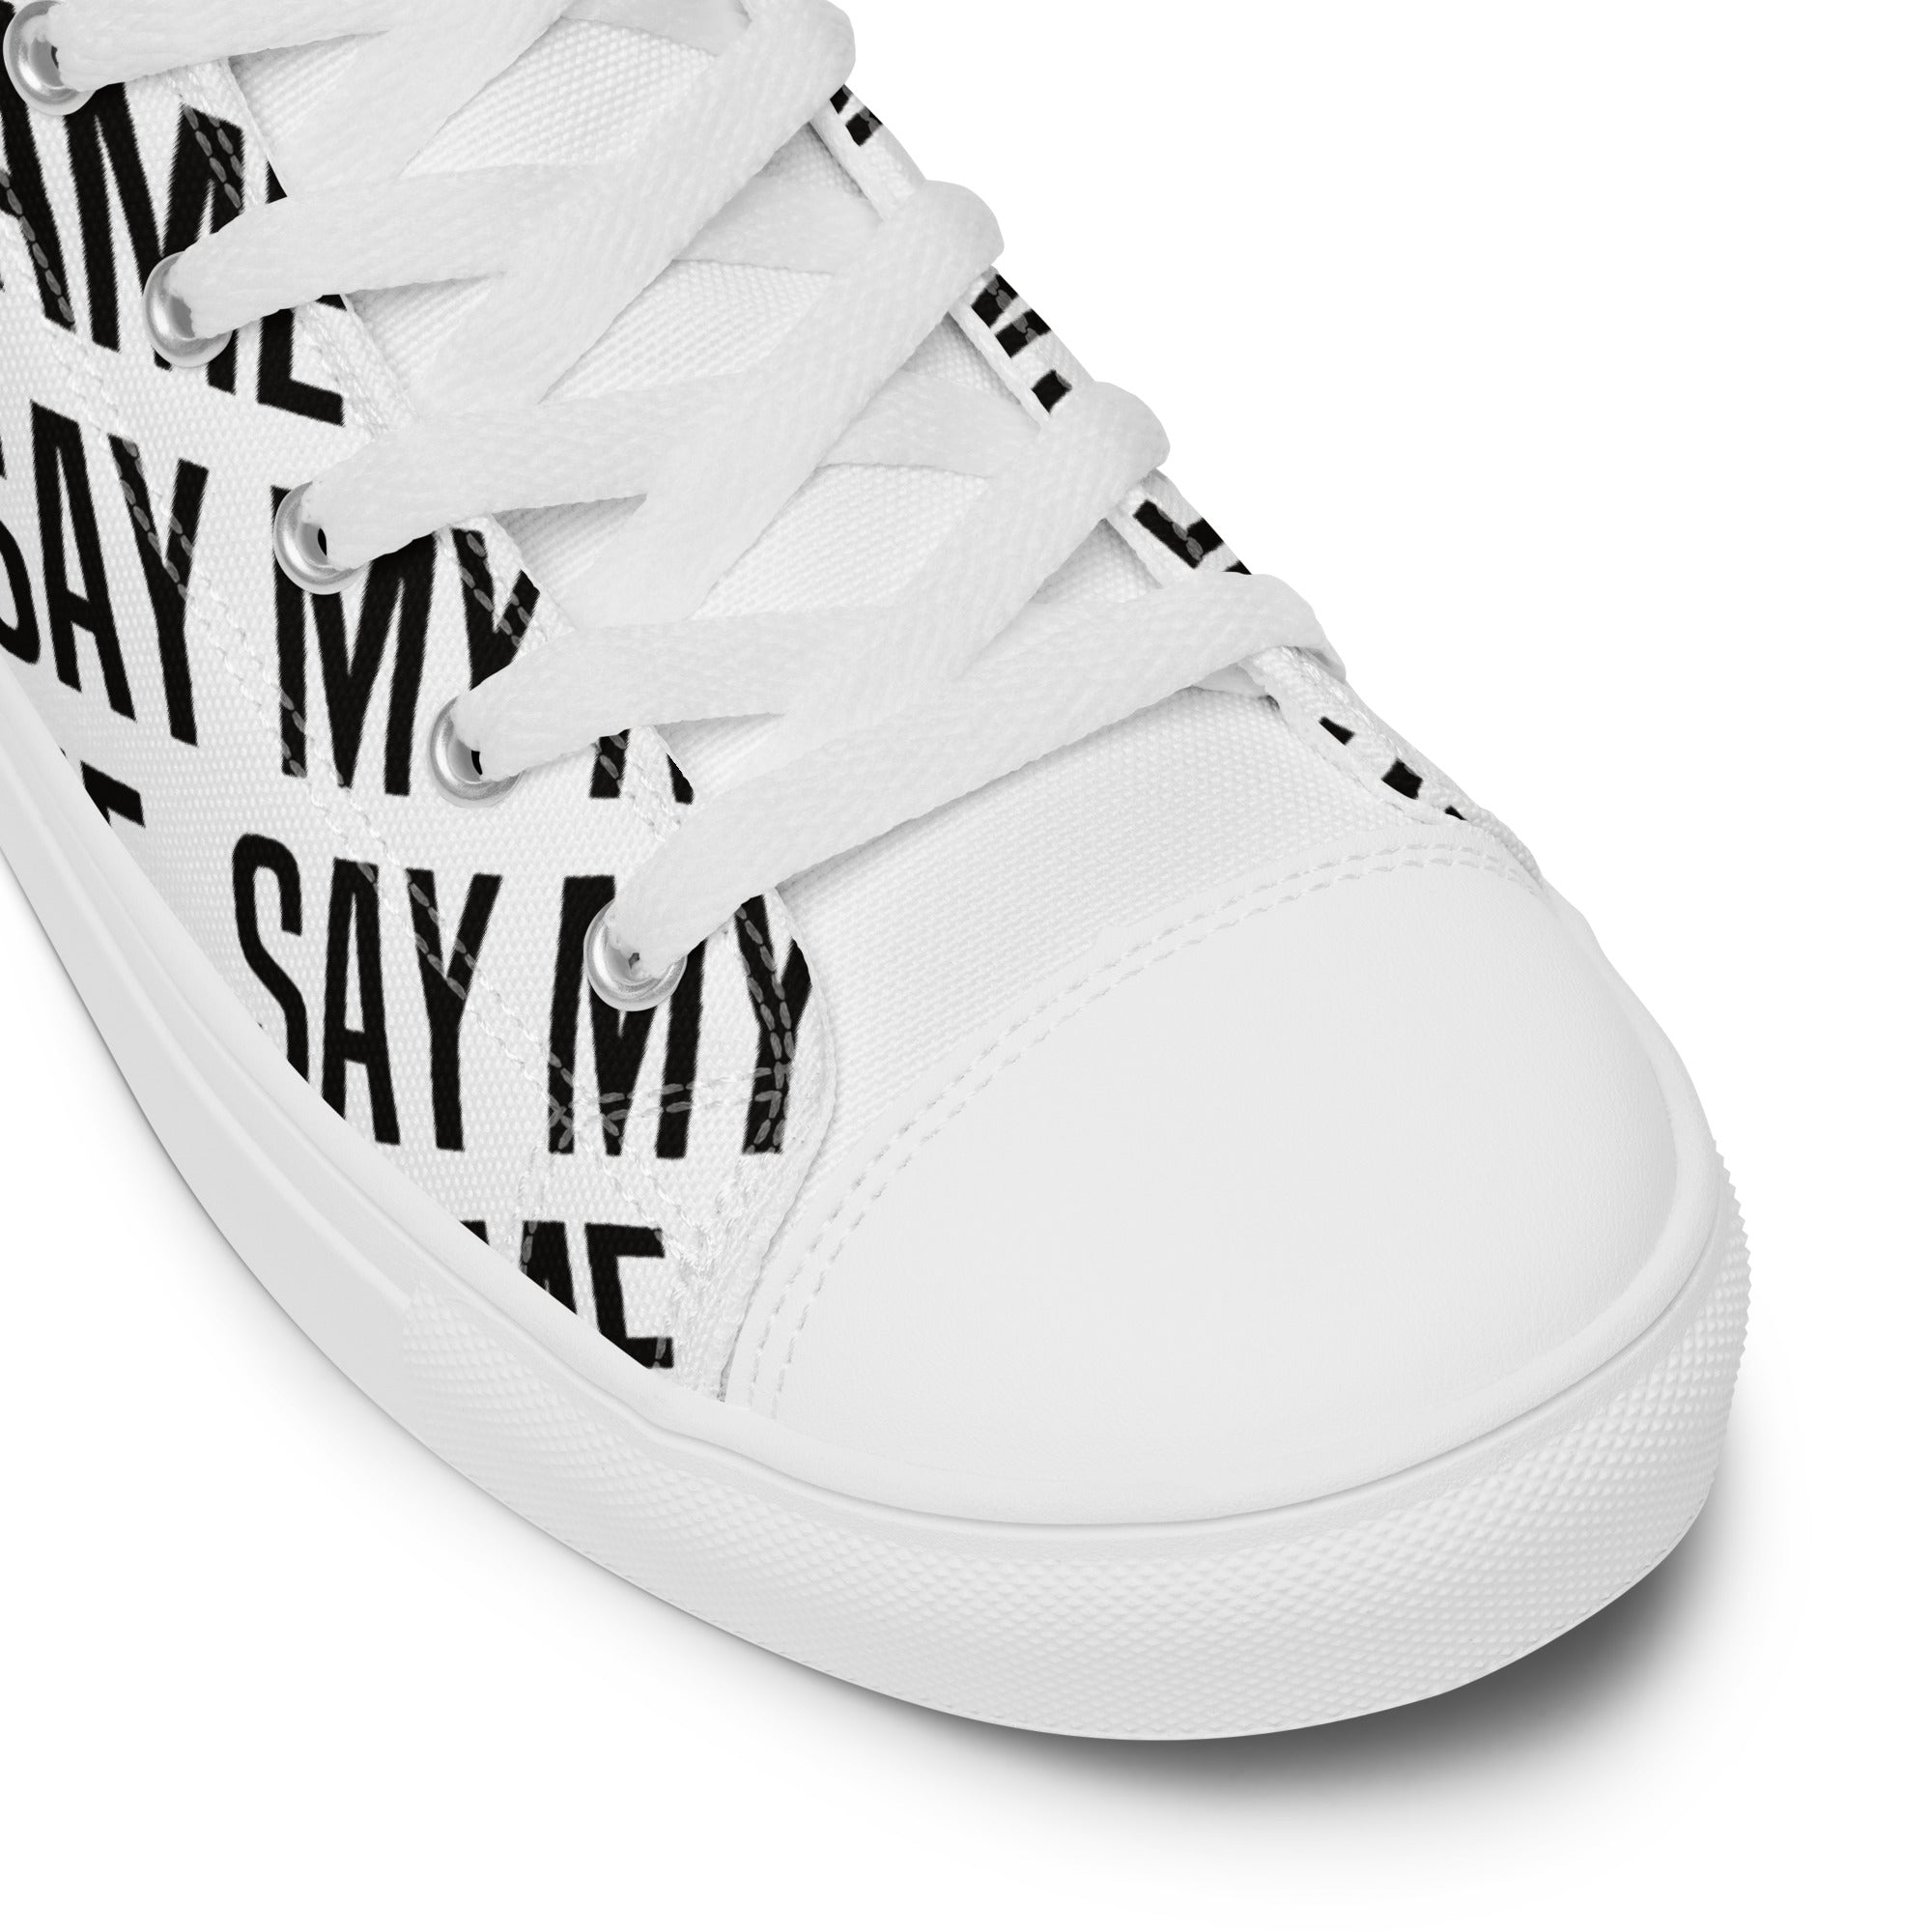 "SAY MY NAME" men's high canvas sneakers Multi black